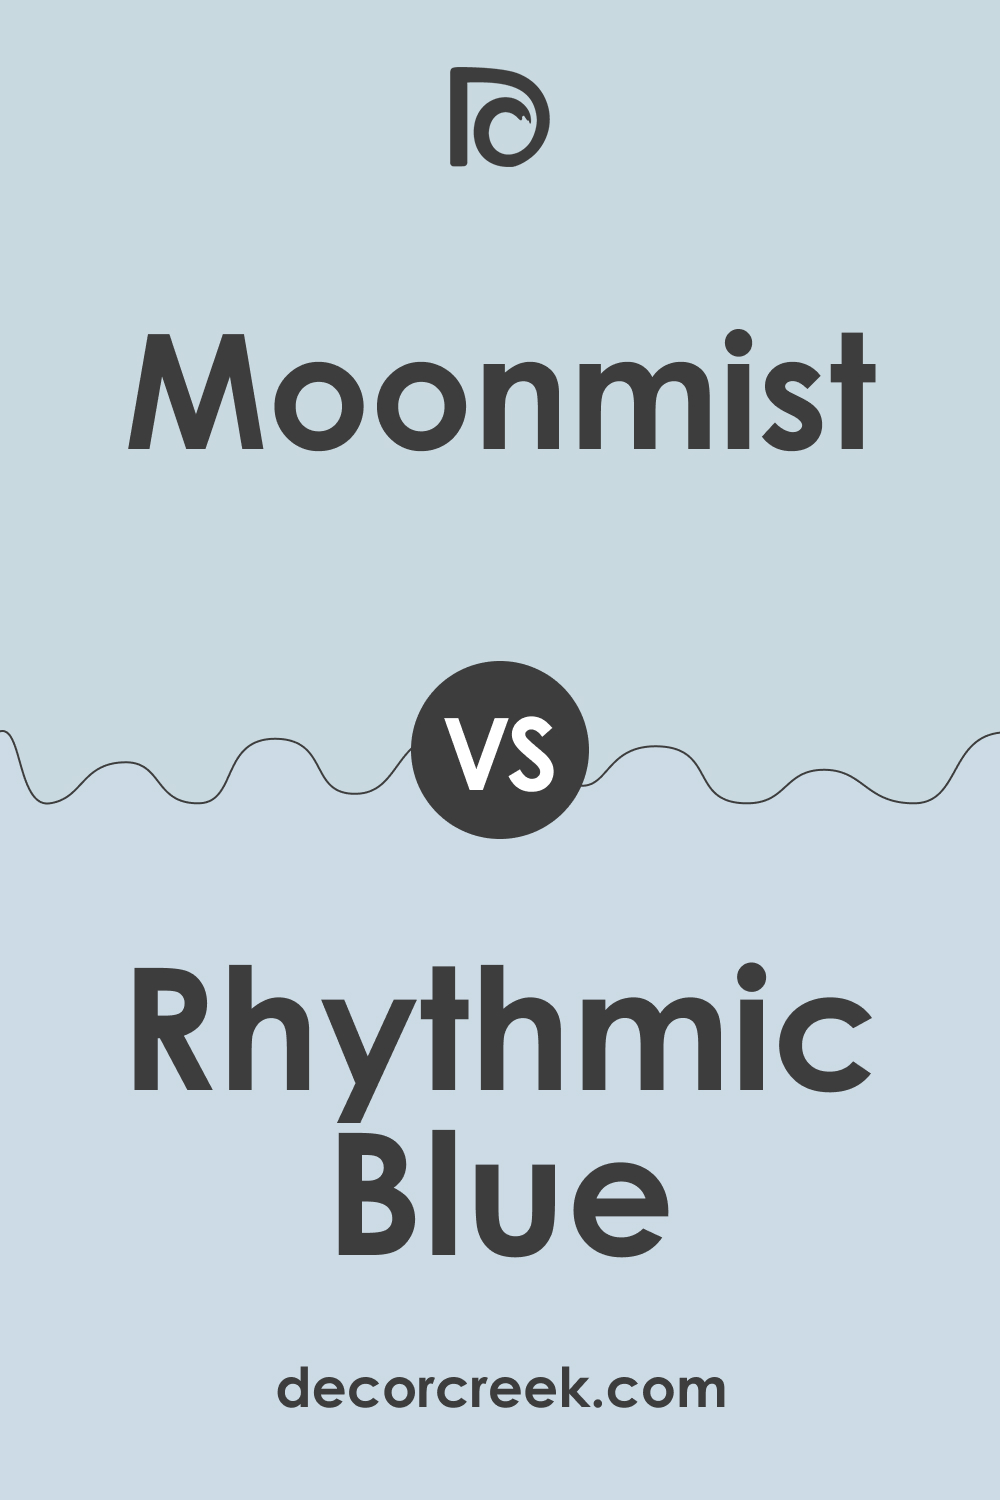 Moonmist vs Rhythmic Blue